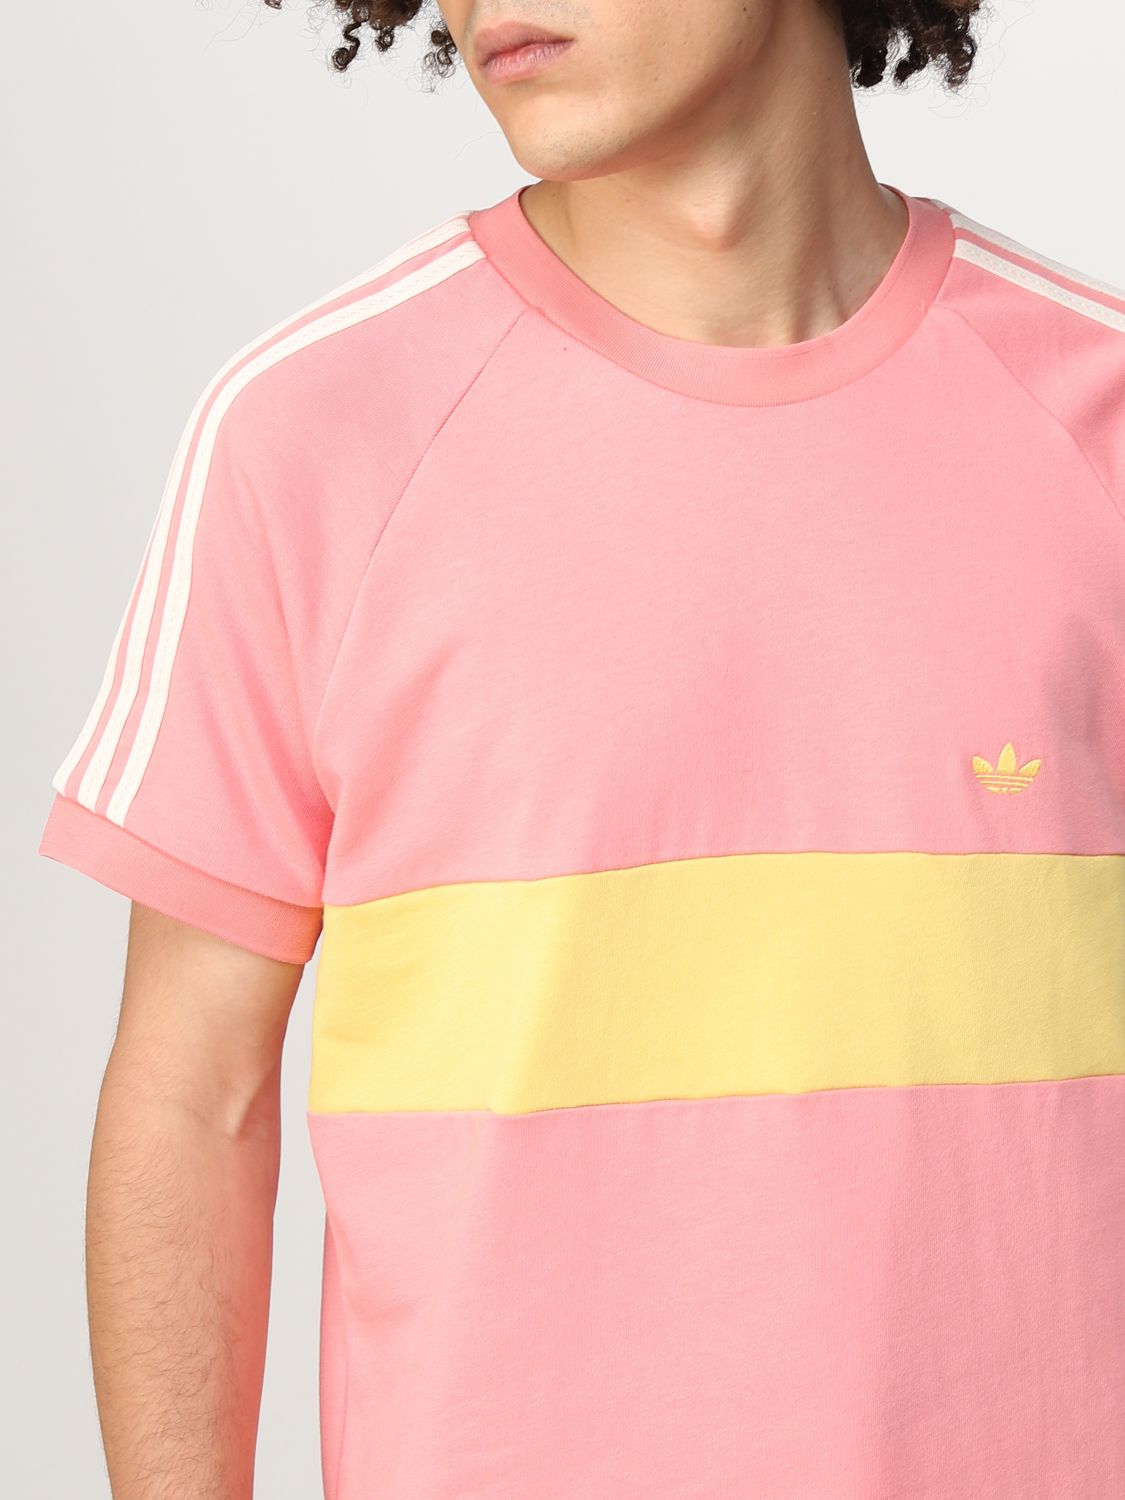 ADIDAS ORIGINALS: Camiseta para hombre, Rosa | Adidas Originals HL8746 línea en GIGLIO.COM